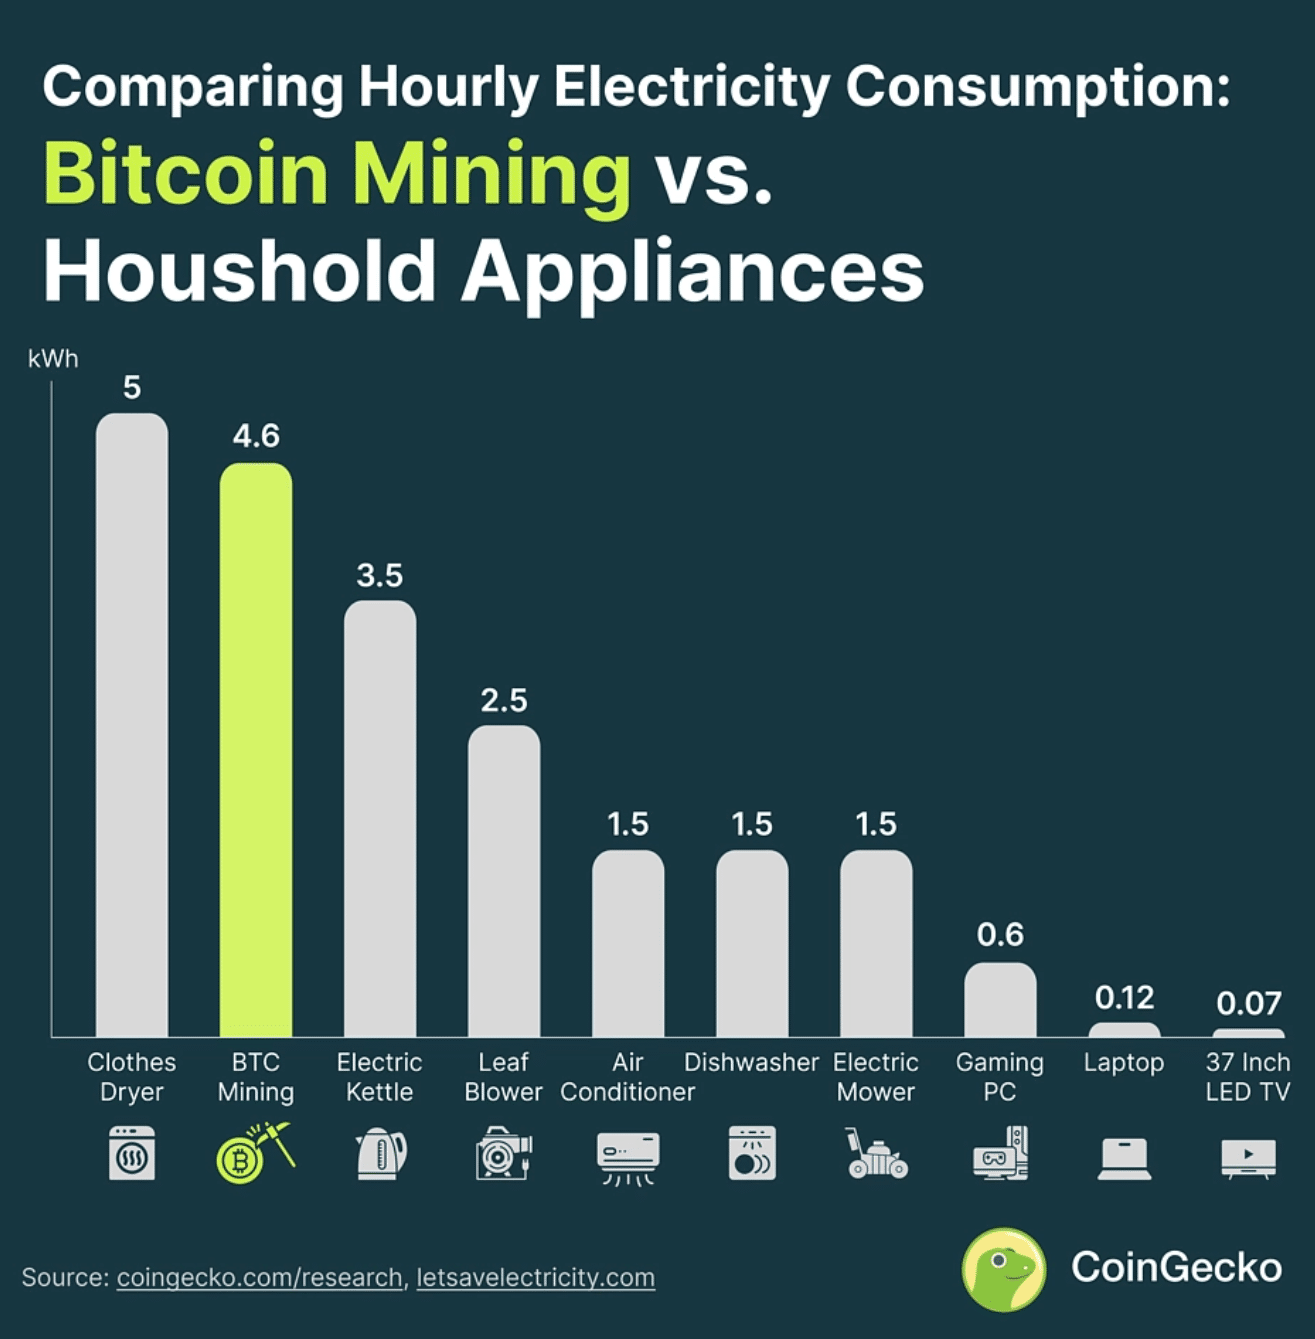 Bitcoin Mining (Household appliances vs. Bitcoin mining electricity consumption)